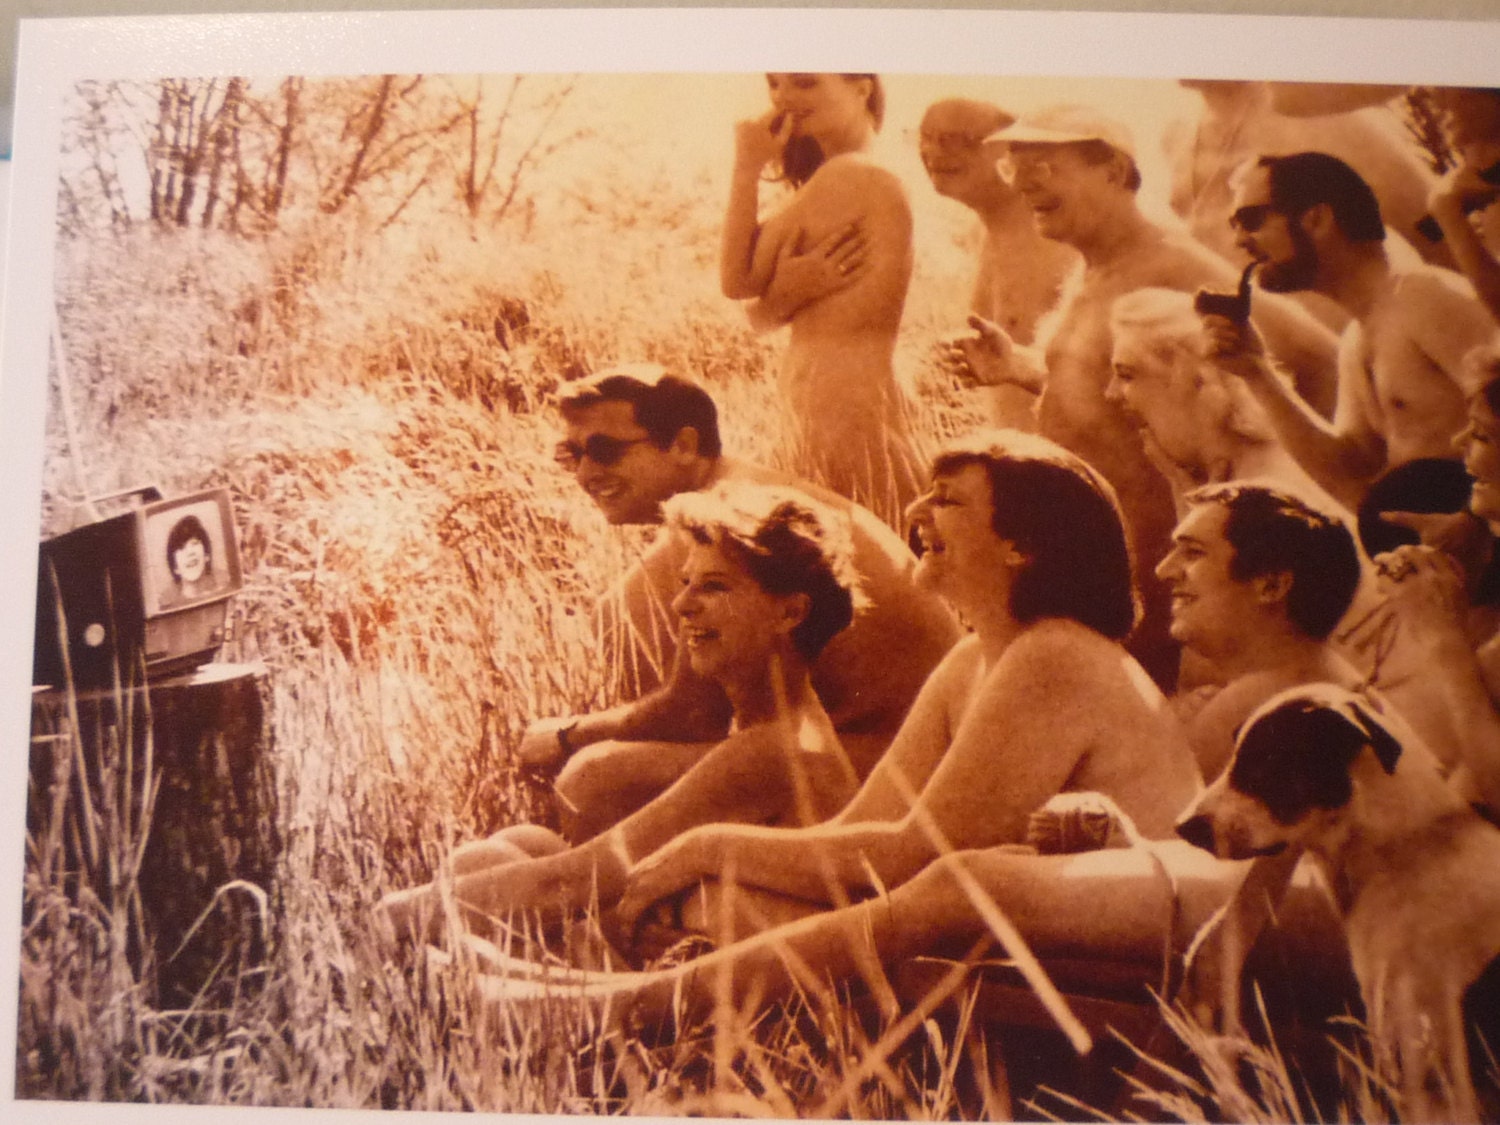 Vintage Family Nudist Camp everything free